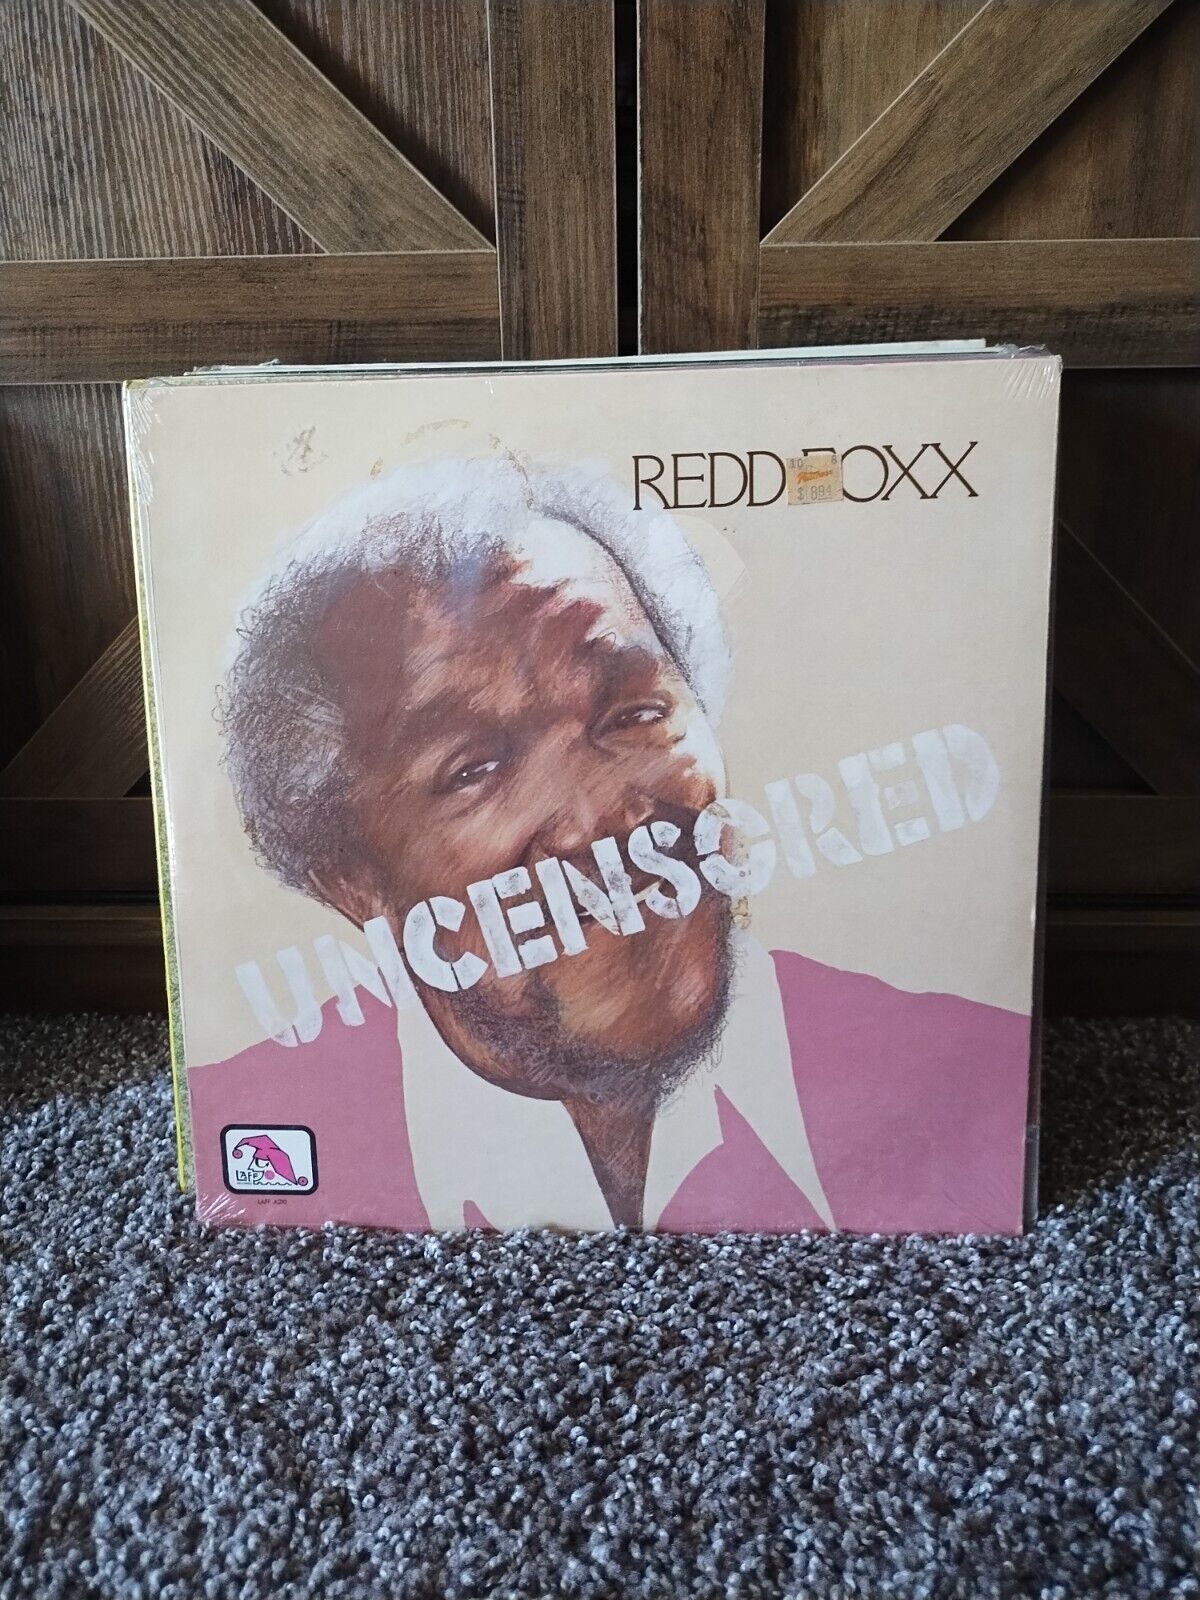 SEALED 1980 Comedy RECORD Vinyl REDD FOXX Uncensored LAFF Stereo A-210